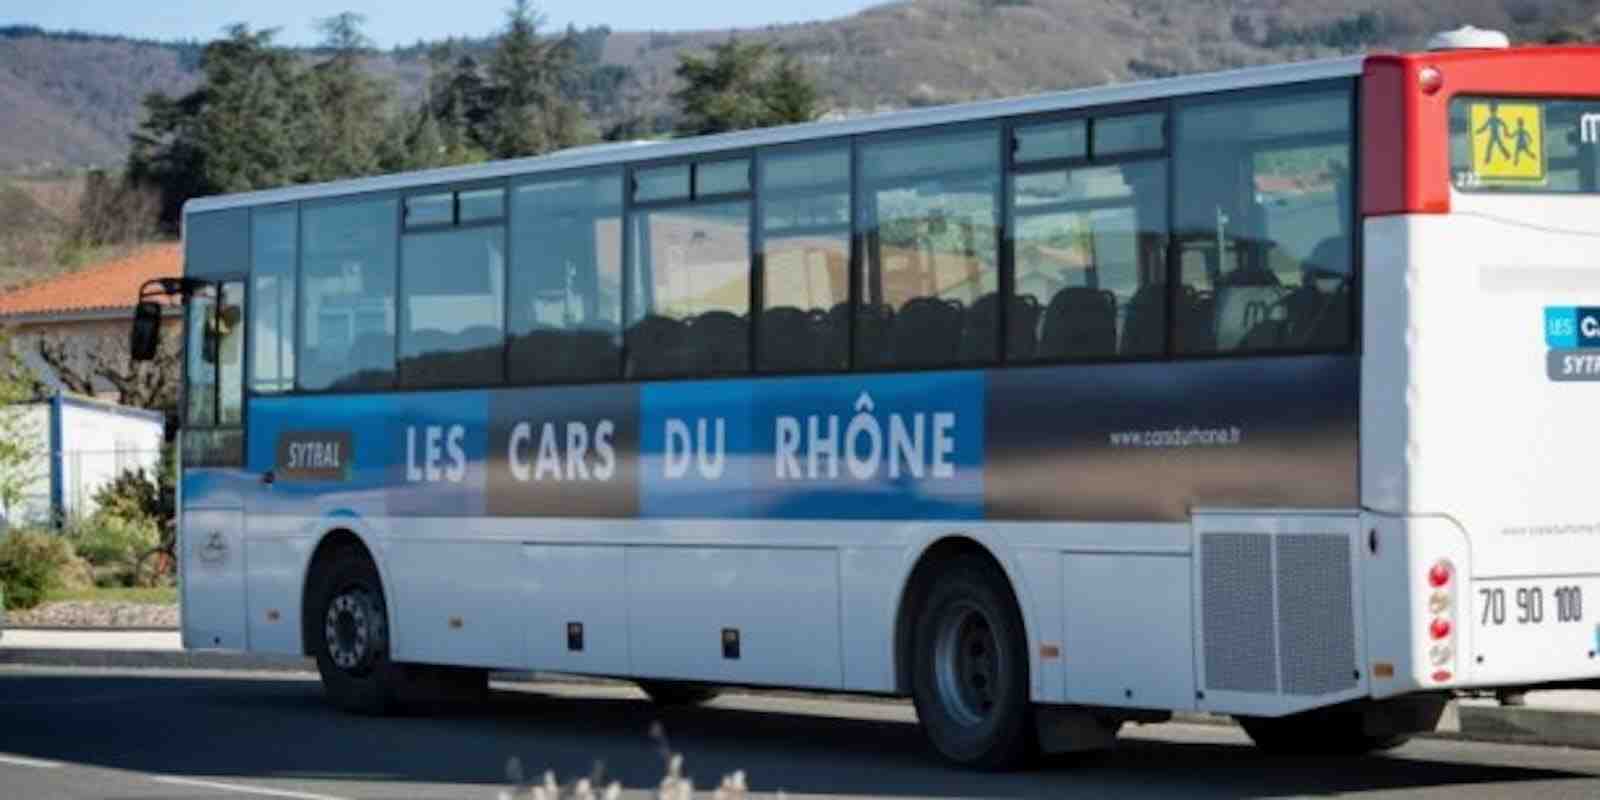 Les Cars du Rhône boostés